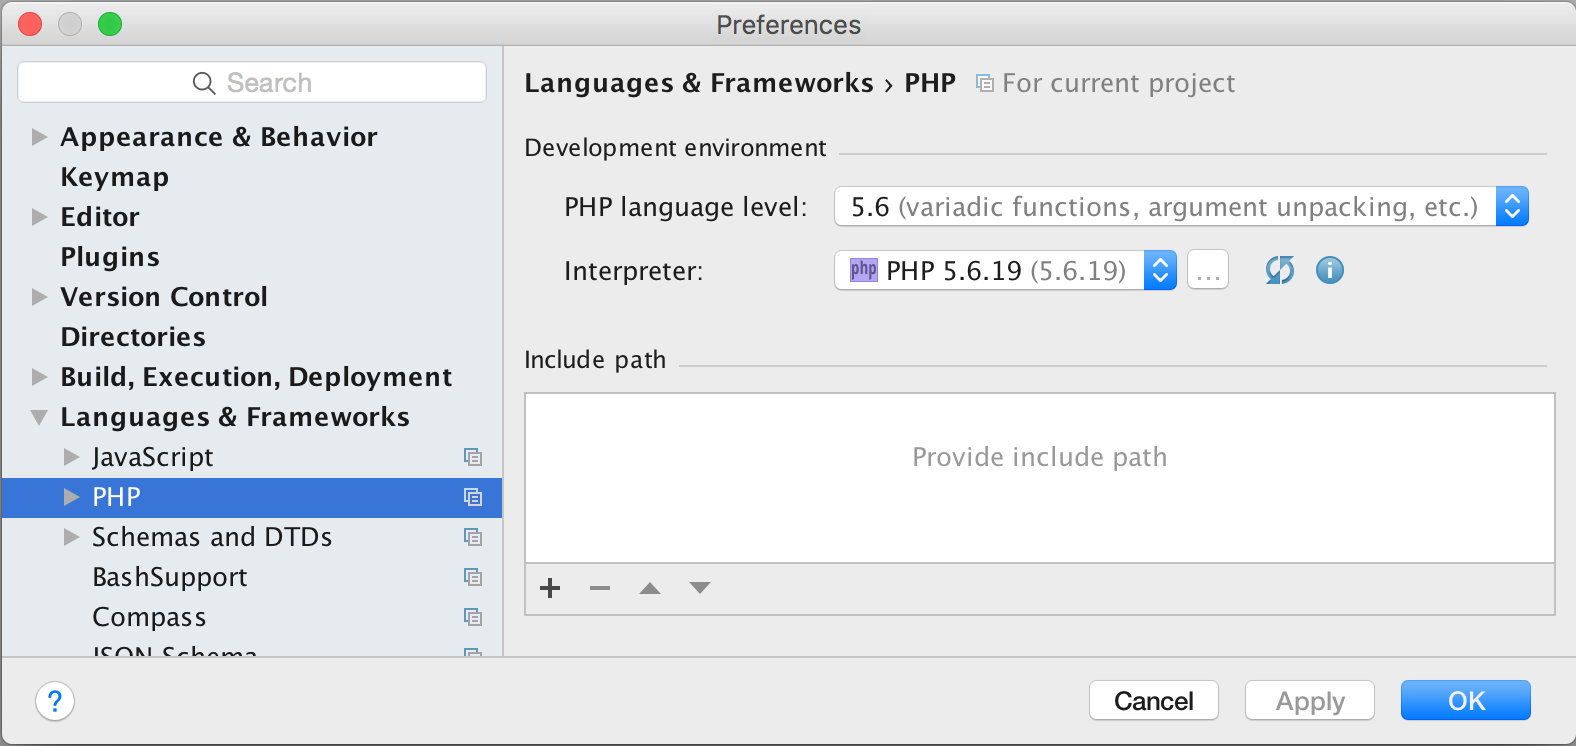 PhpStorm PHP preference panel